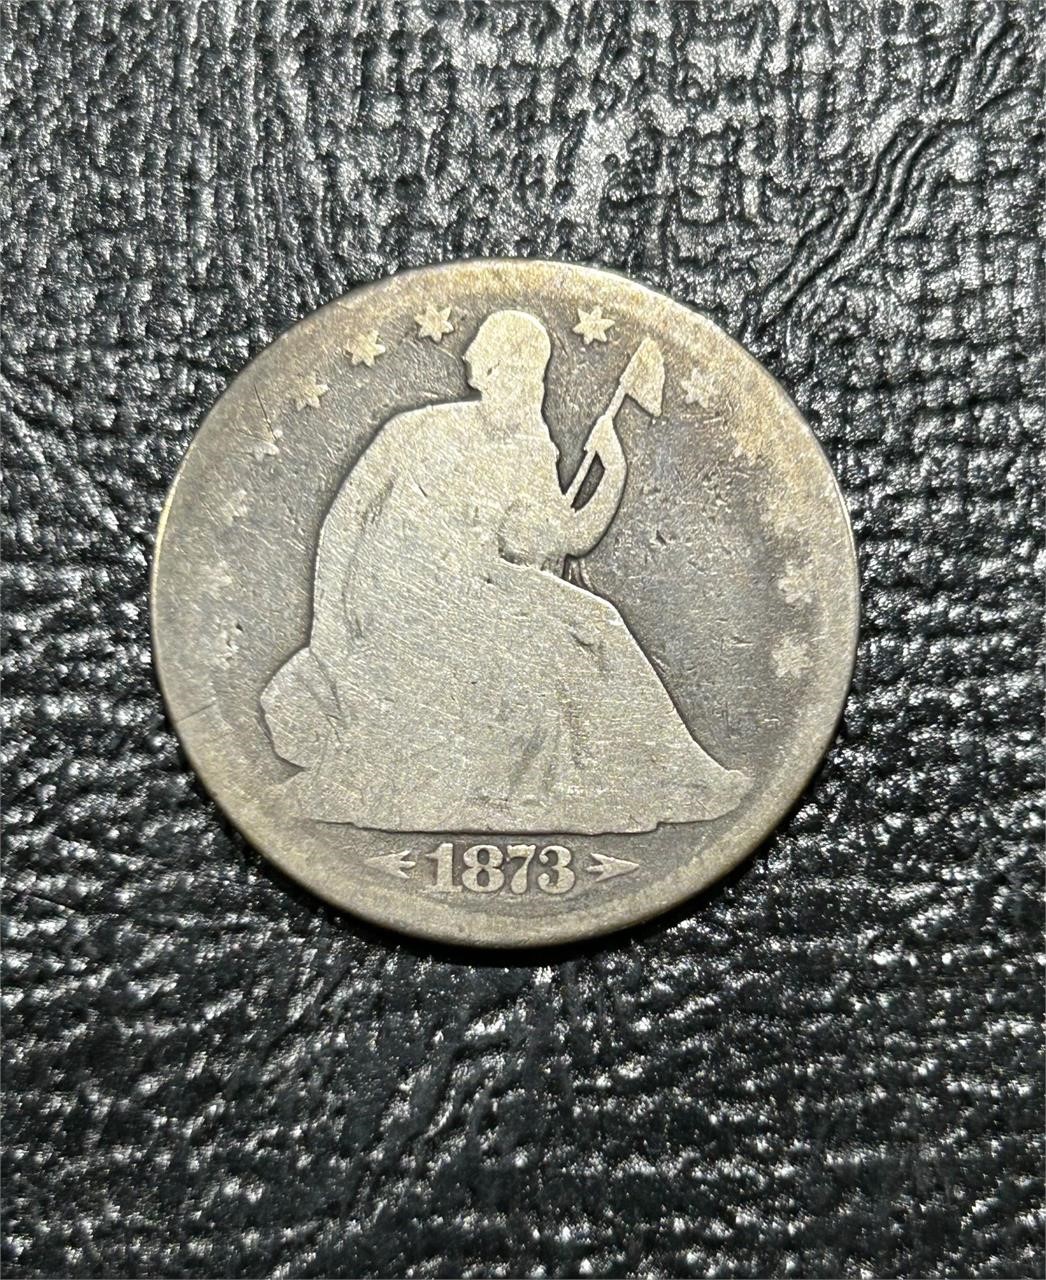 1873 US Seated Liberty Half Dollar